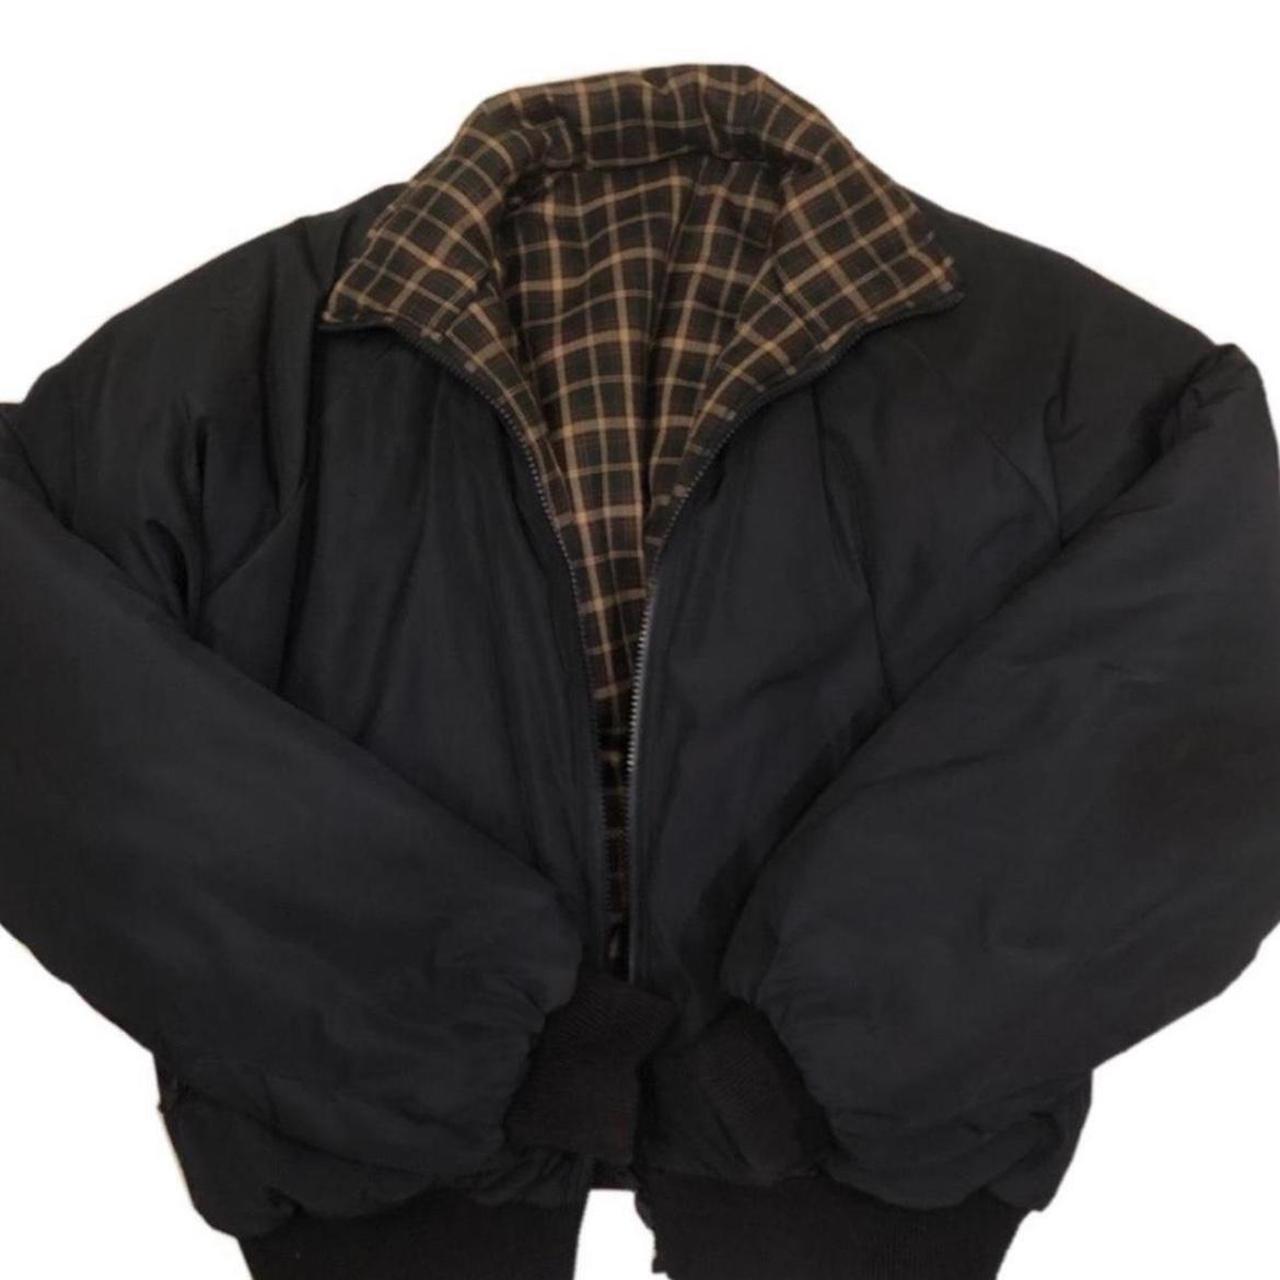 ISO! Brandy Melville faith plaid puffer jacket, Pls